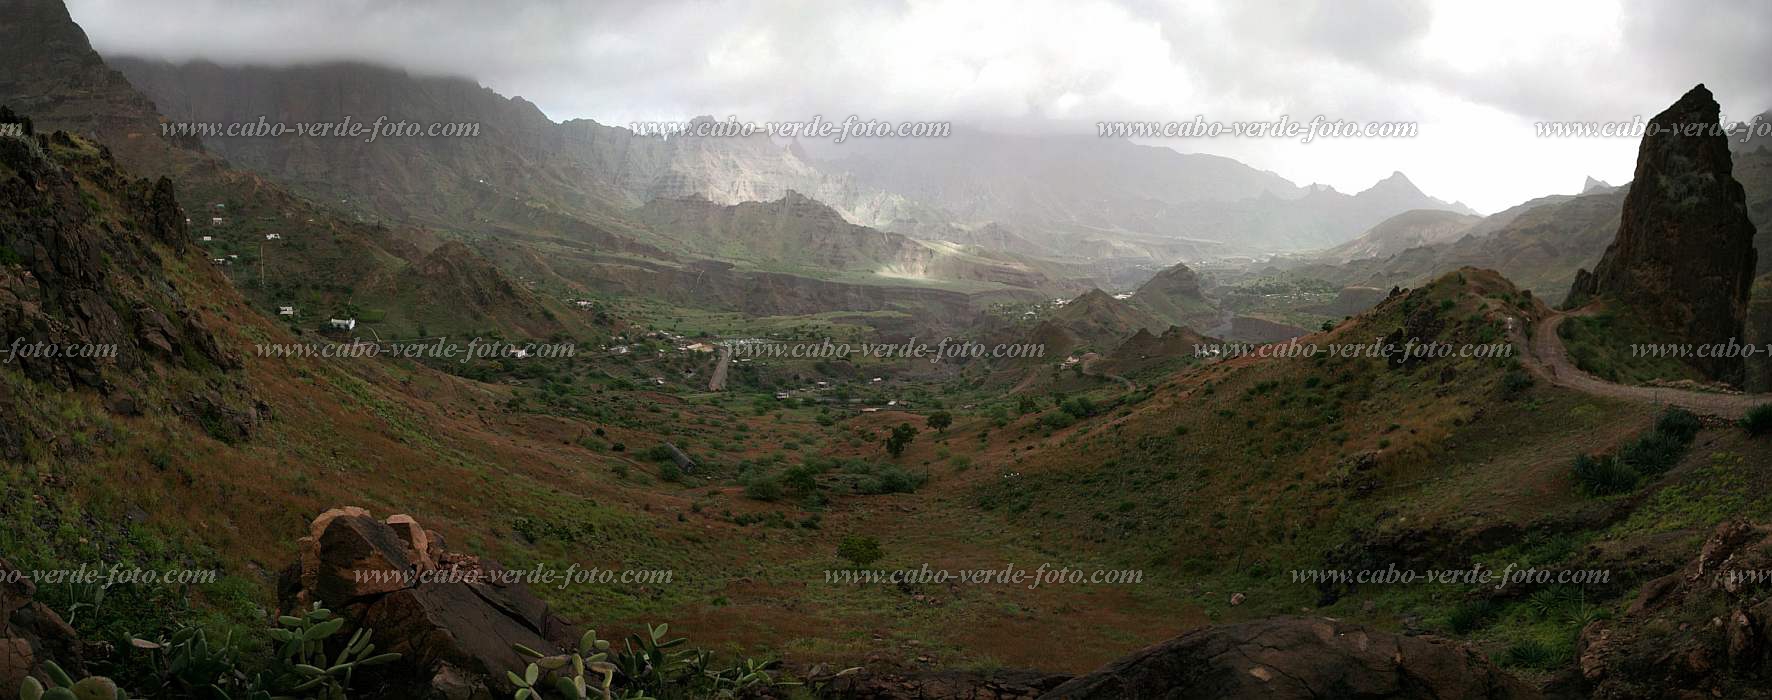 Insel: Santo Anto  Wanderweg: 309 Ort: Ribeira das Patas Motiv: Panorama Motivgruppe: Landscape Mountain © Florian Drmer www.Cabo-Verde-Foto.com